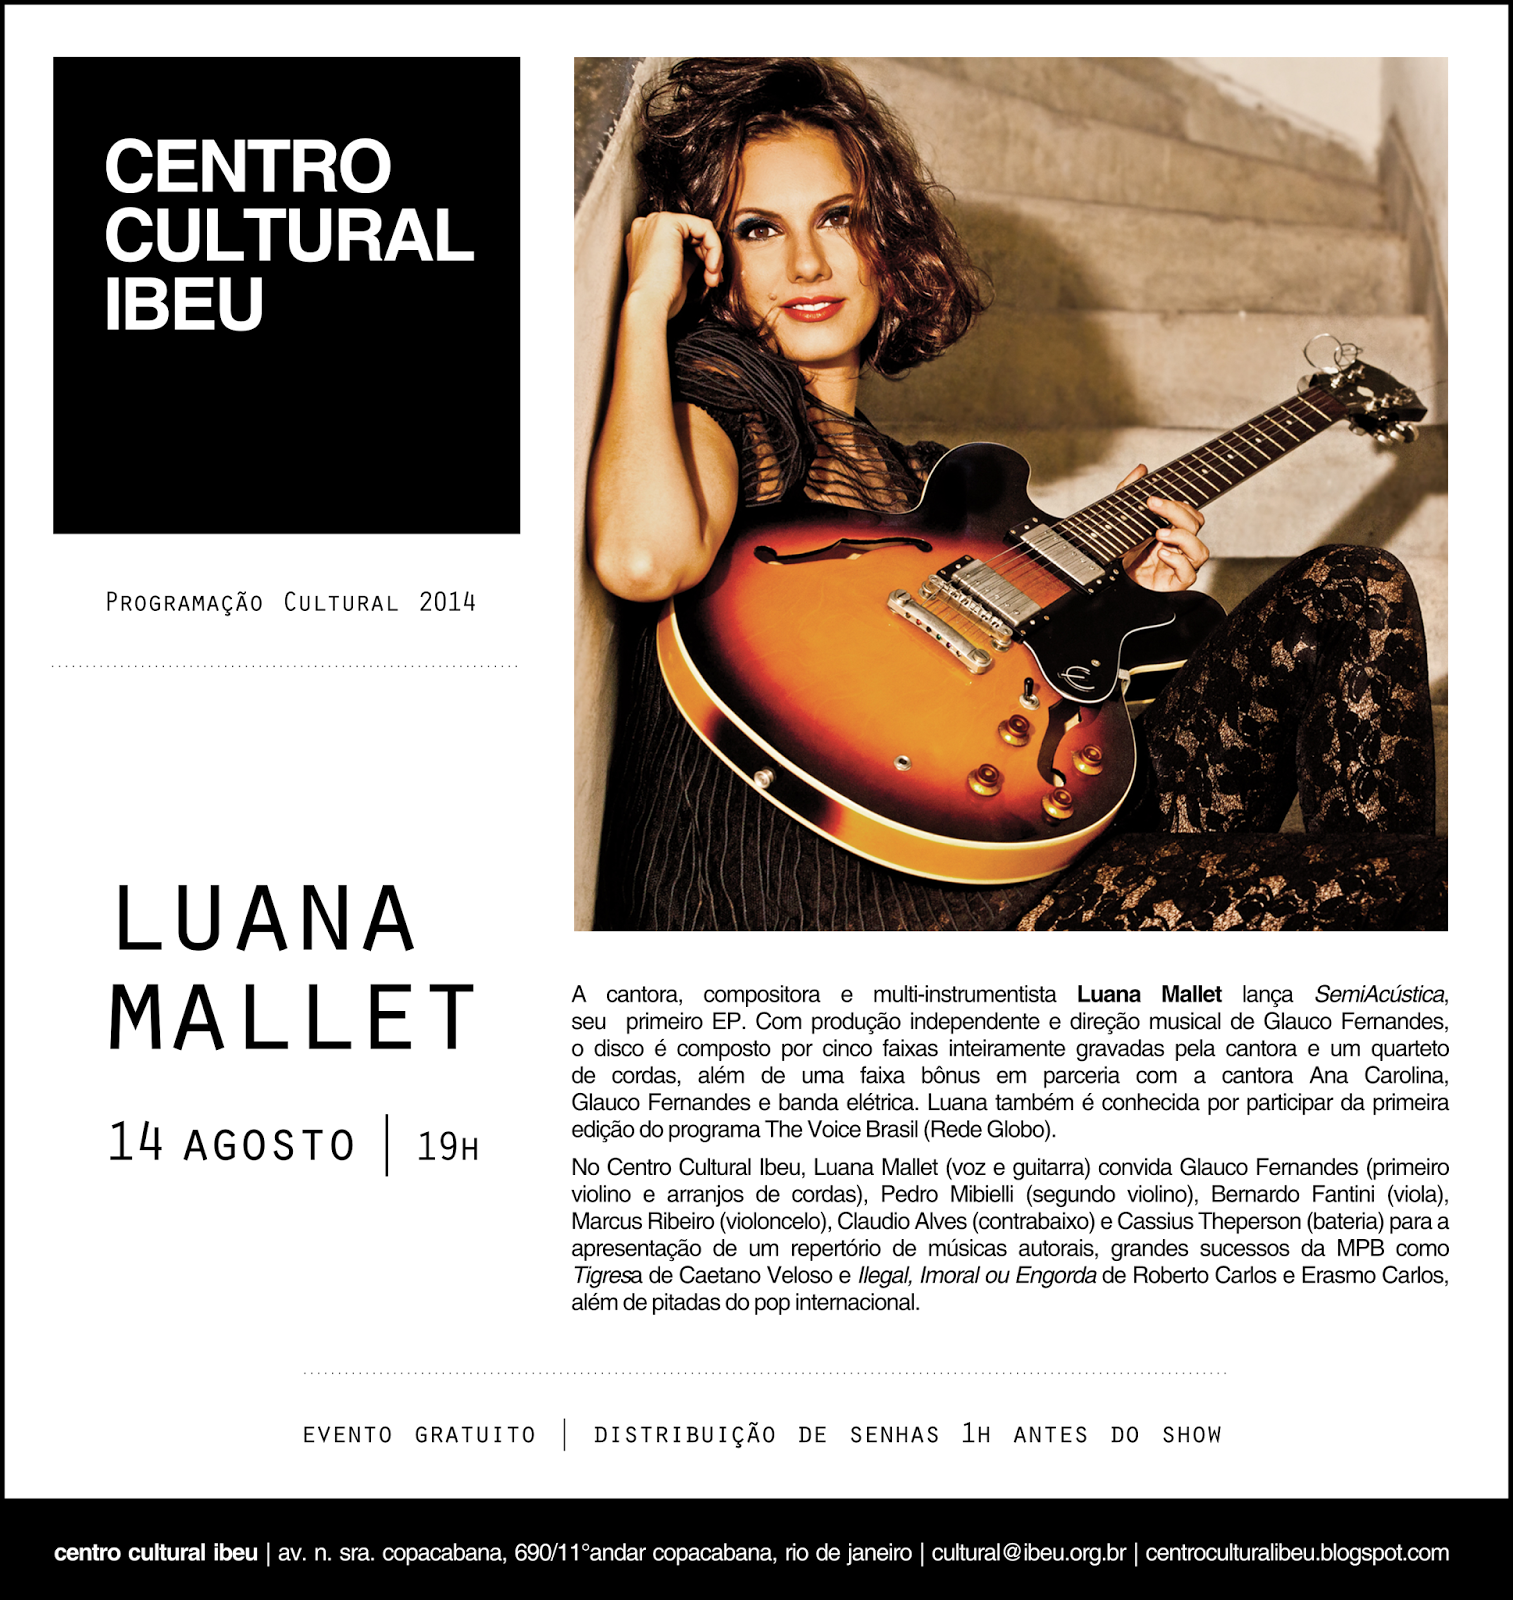 CentroCulturalIbeu LuanaMallet 14agosto 14 de agosto - Luana Mallet